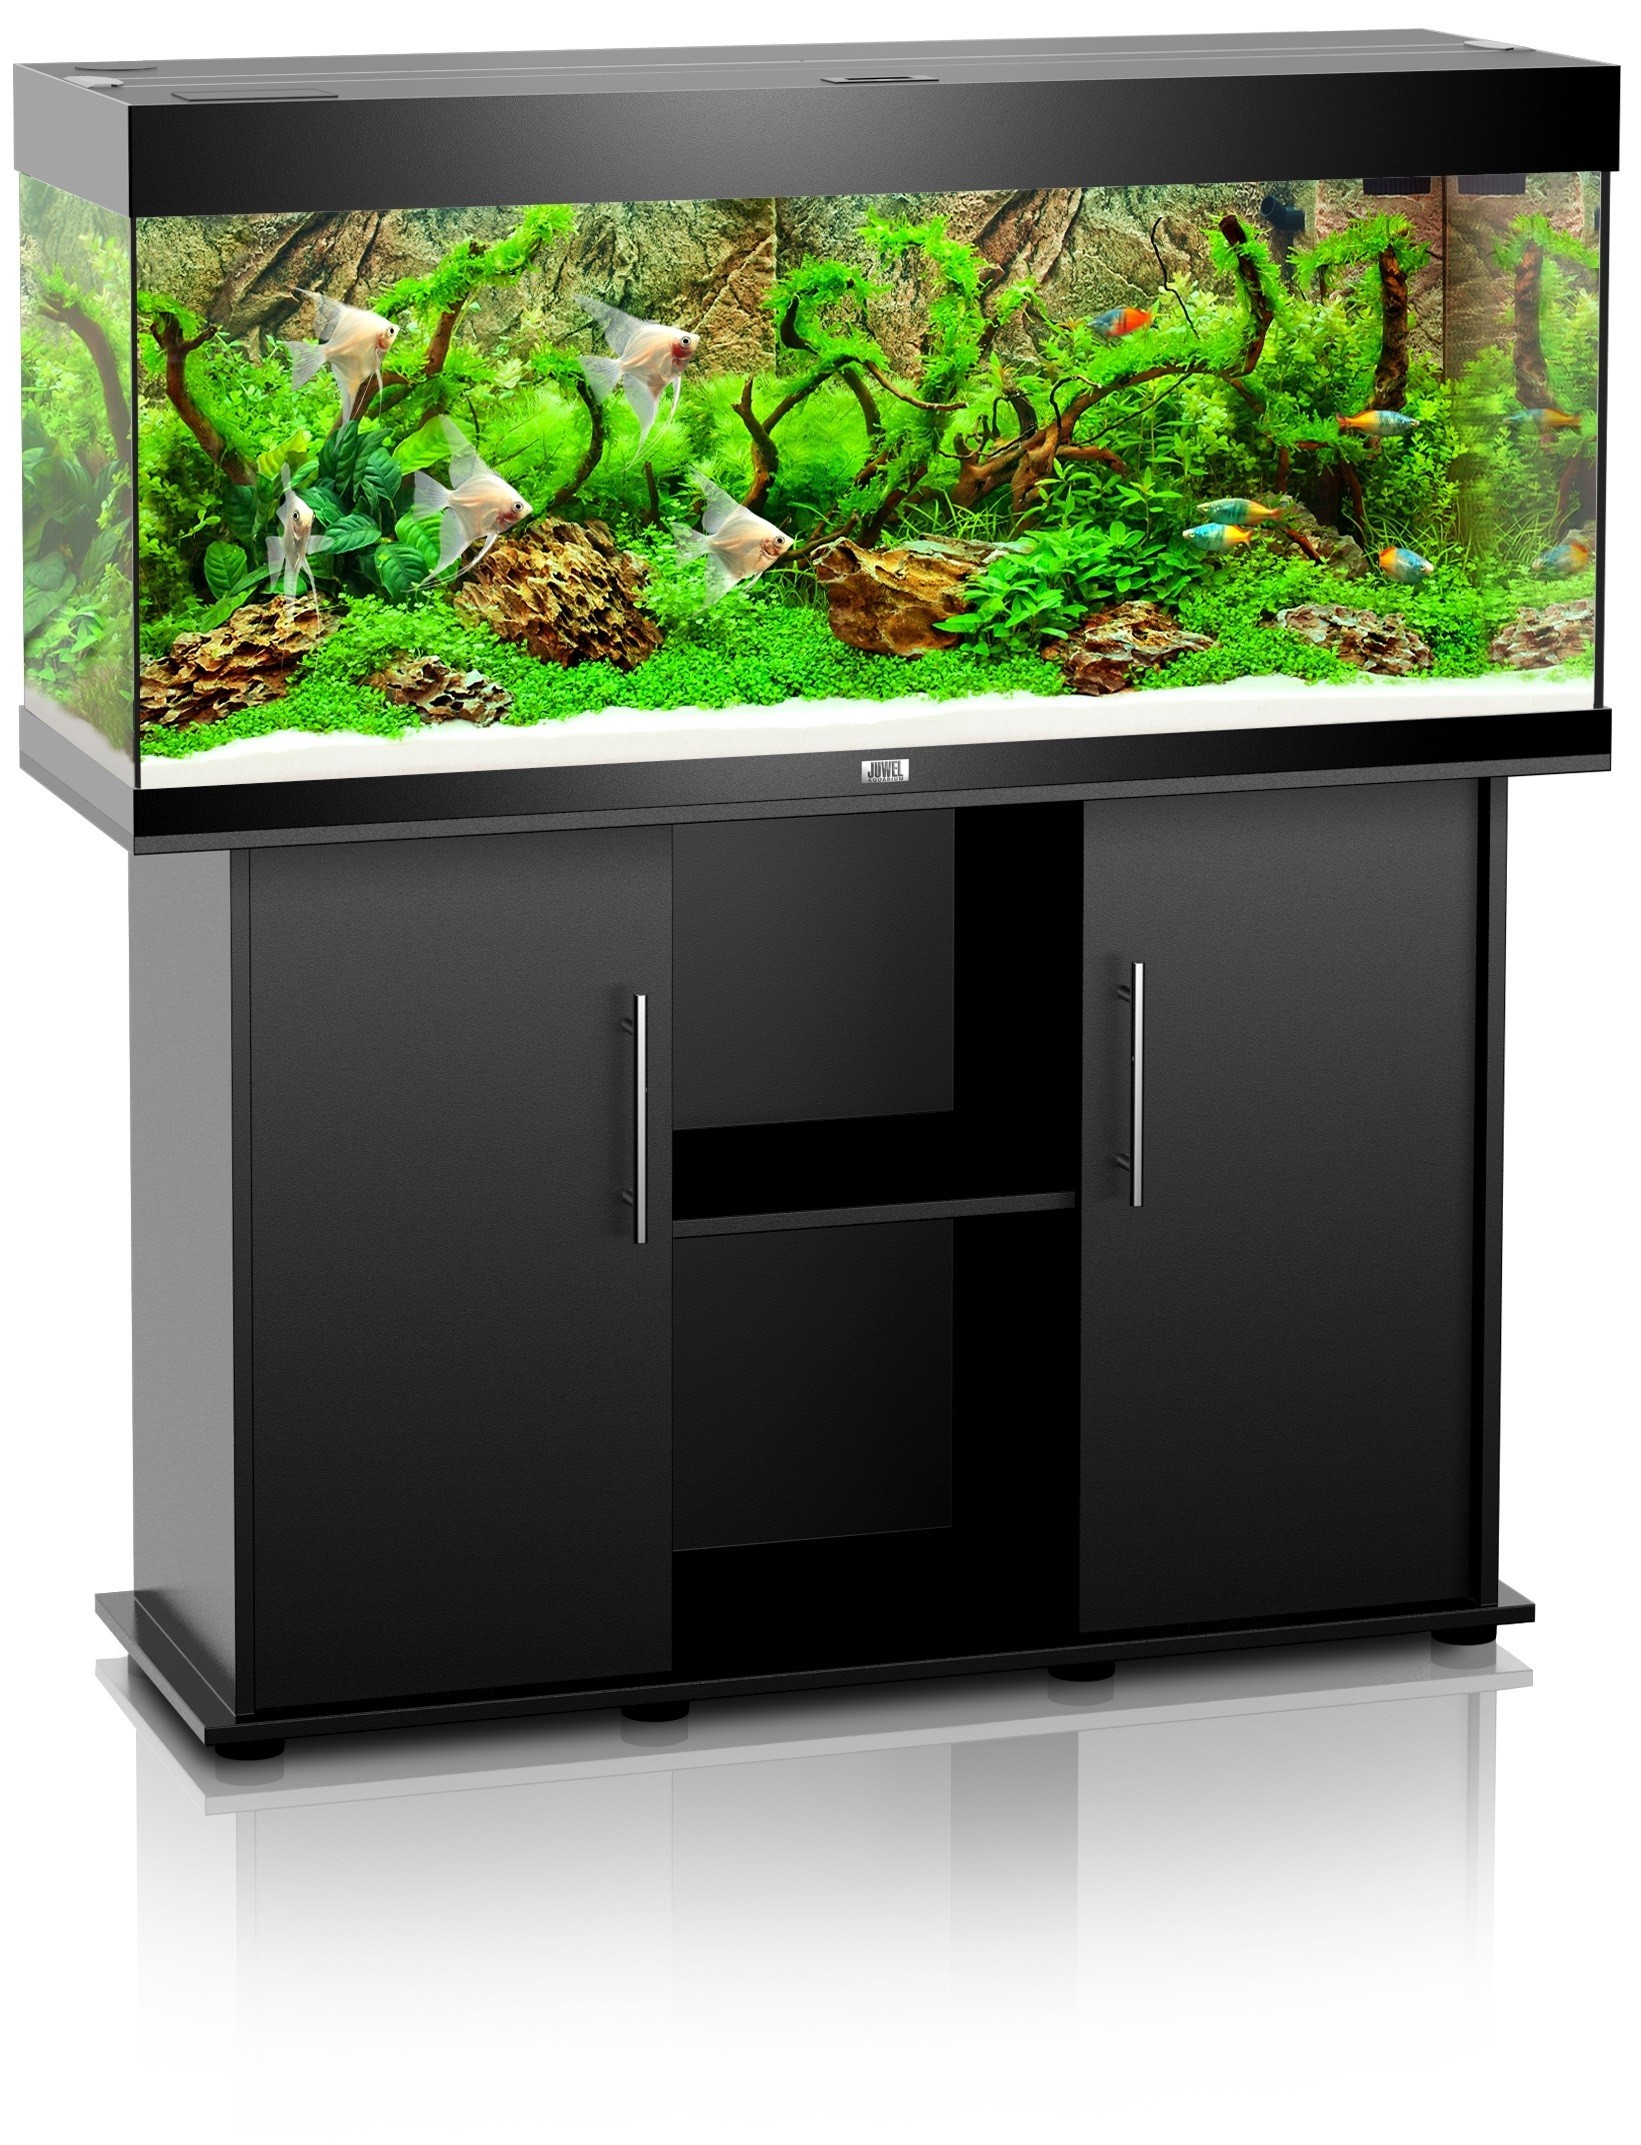 Aquarium Juwel Rio 240 noir + meuble